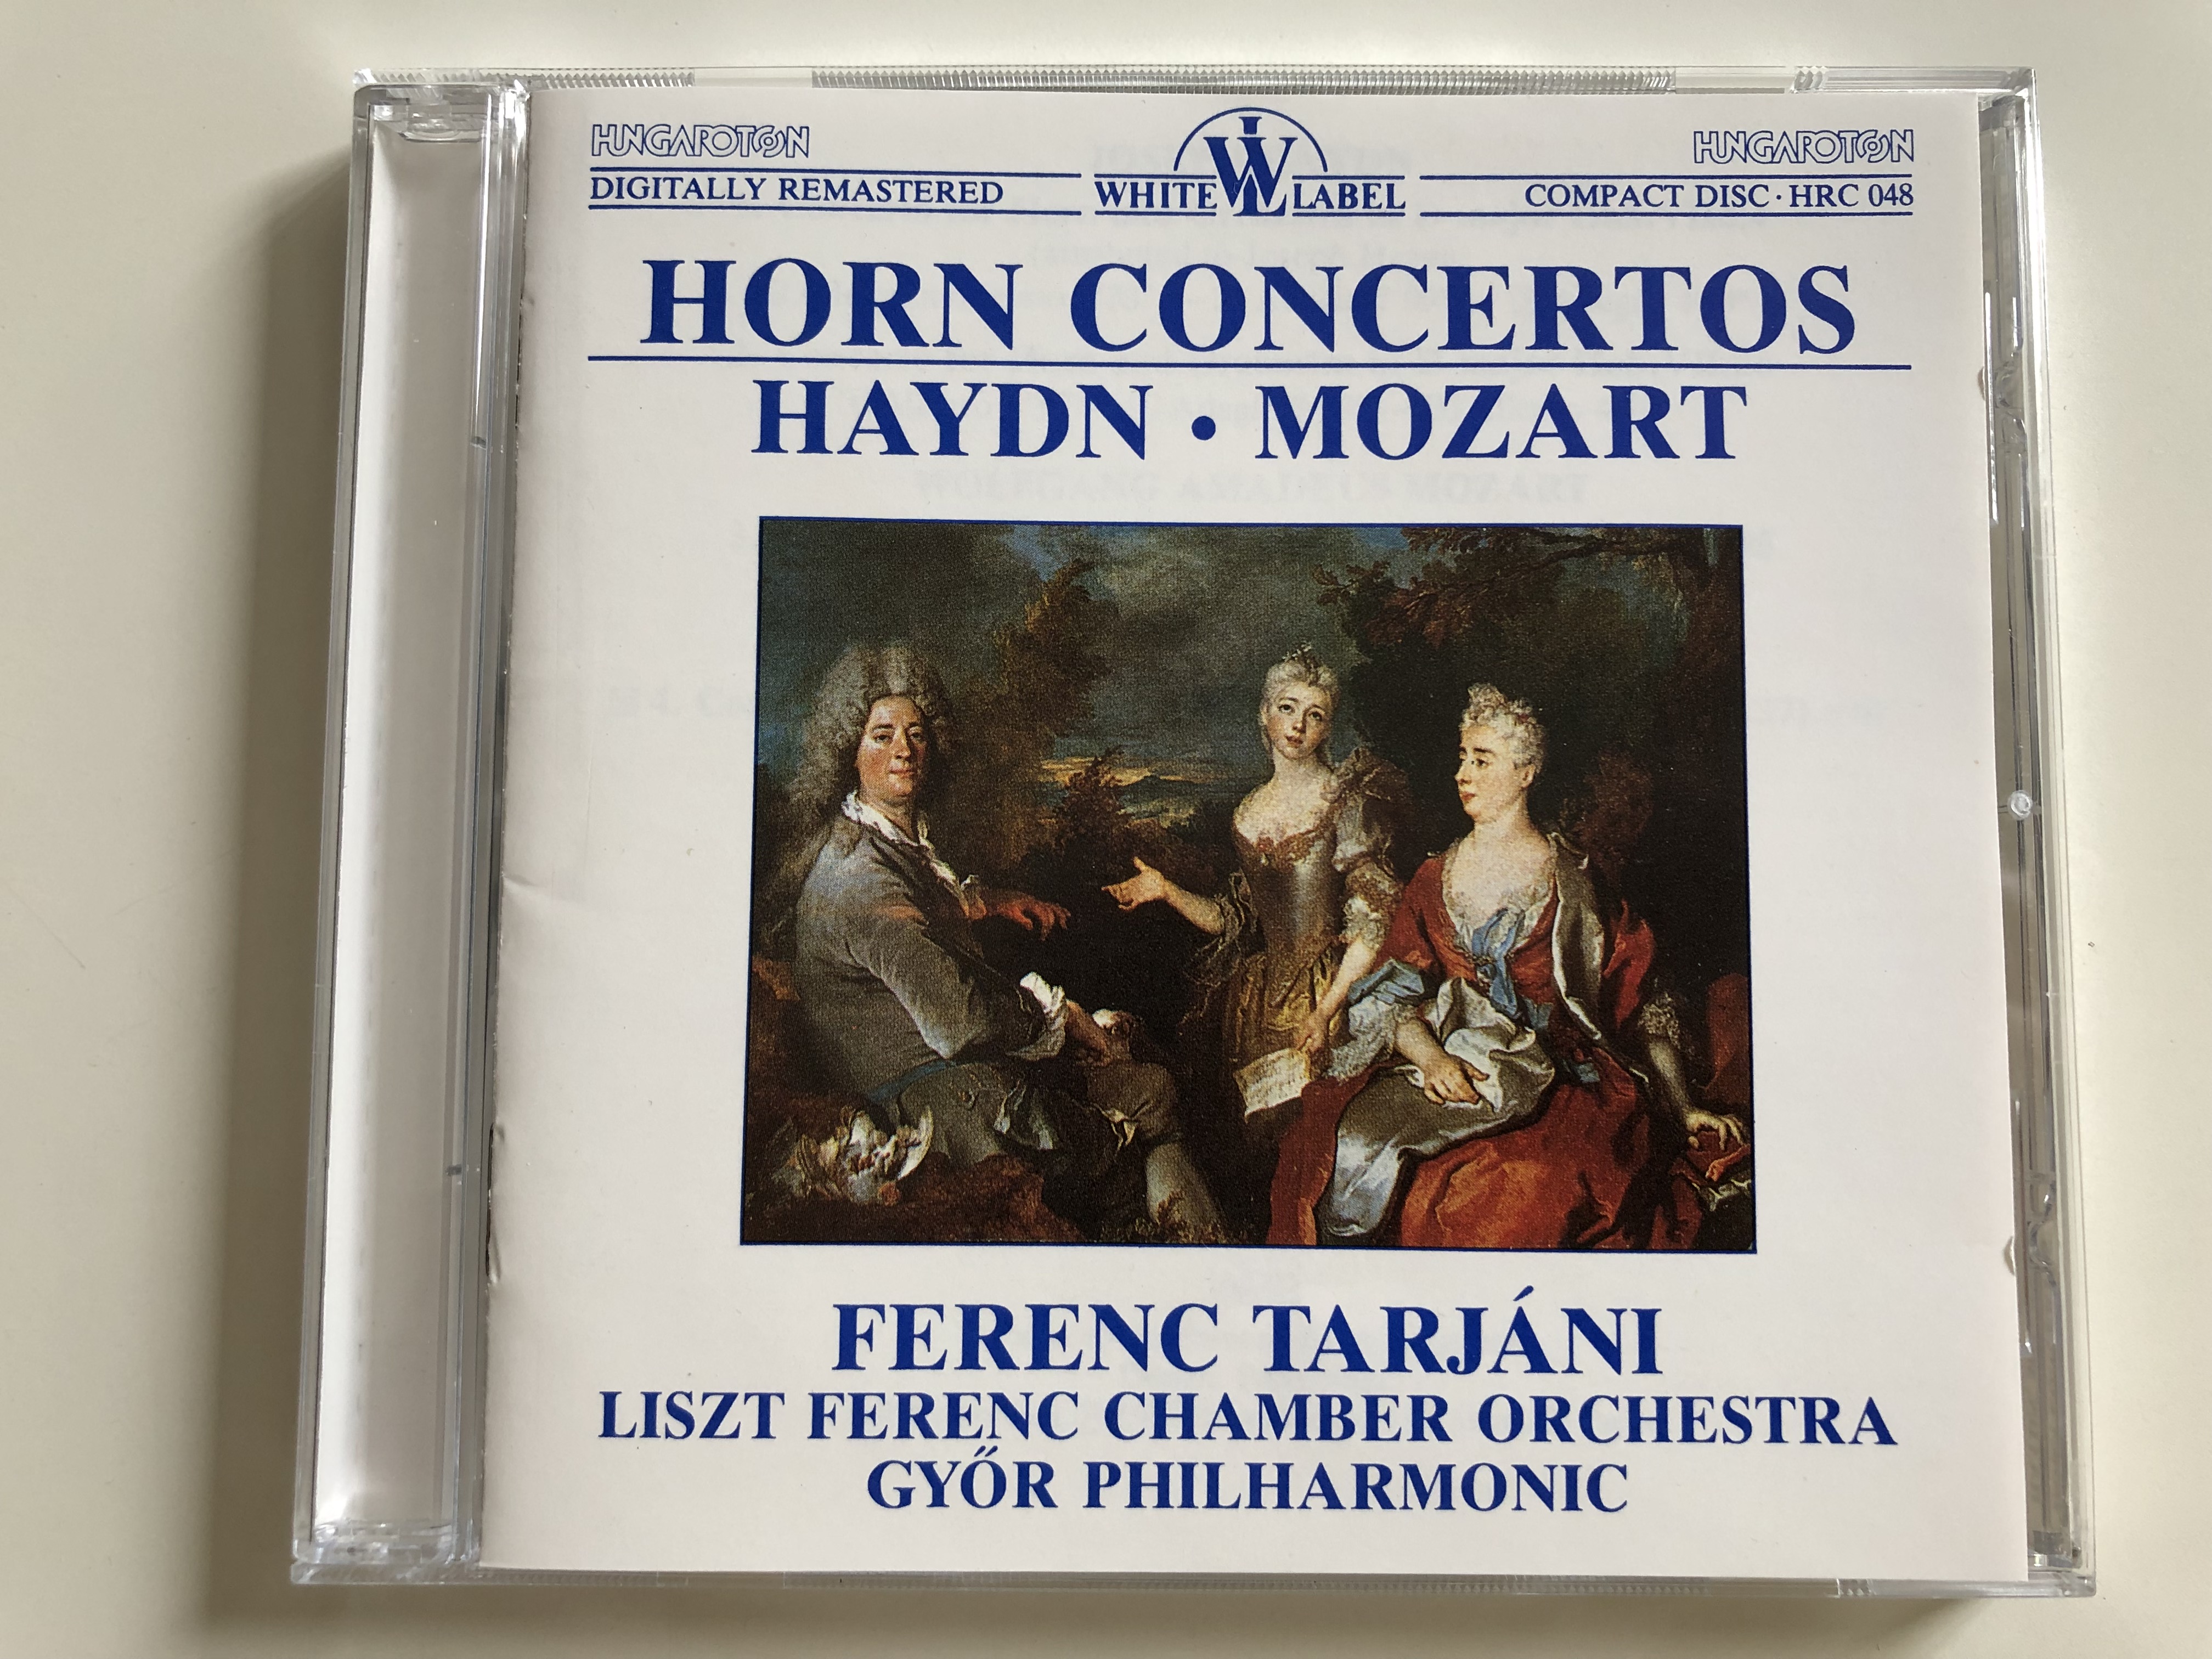 horn-concertos-haydn-mozart-ferenc-tarj-ni-liszt-ferenc-chamber-orchestra-gy-r-philharmonic-hungaroton-white-label-audio-cd-1987-hrc-048-1-.jpg